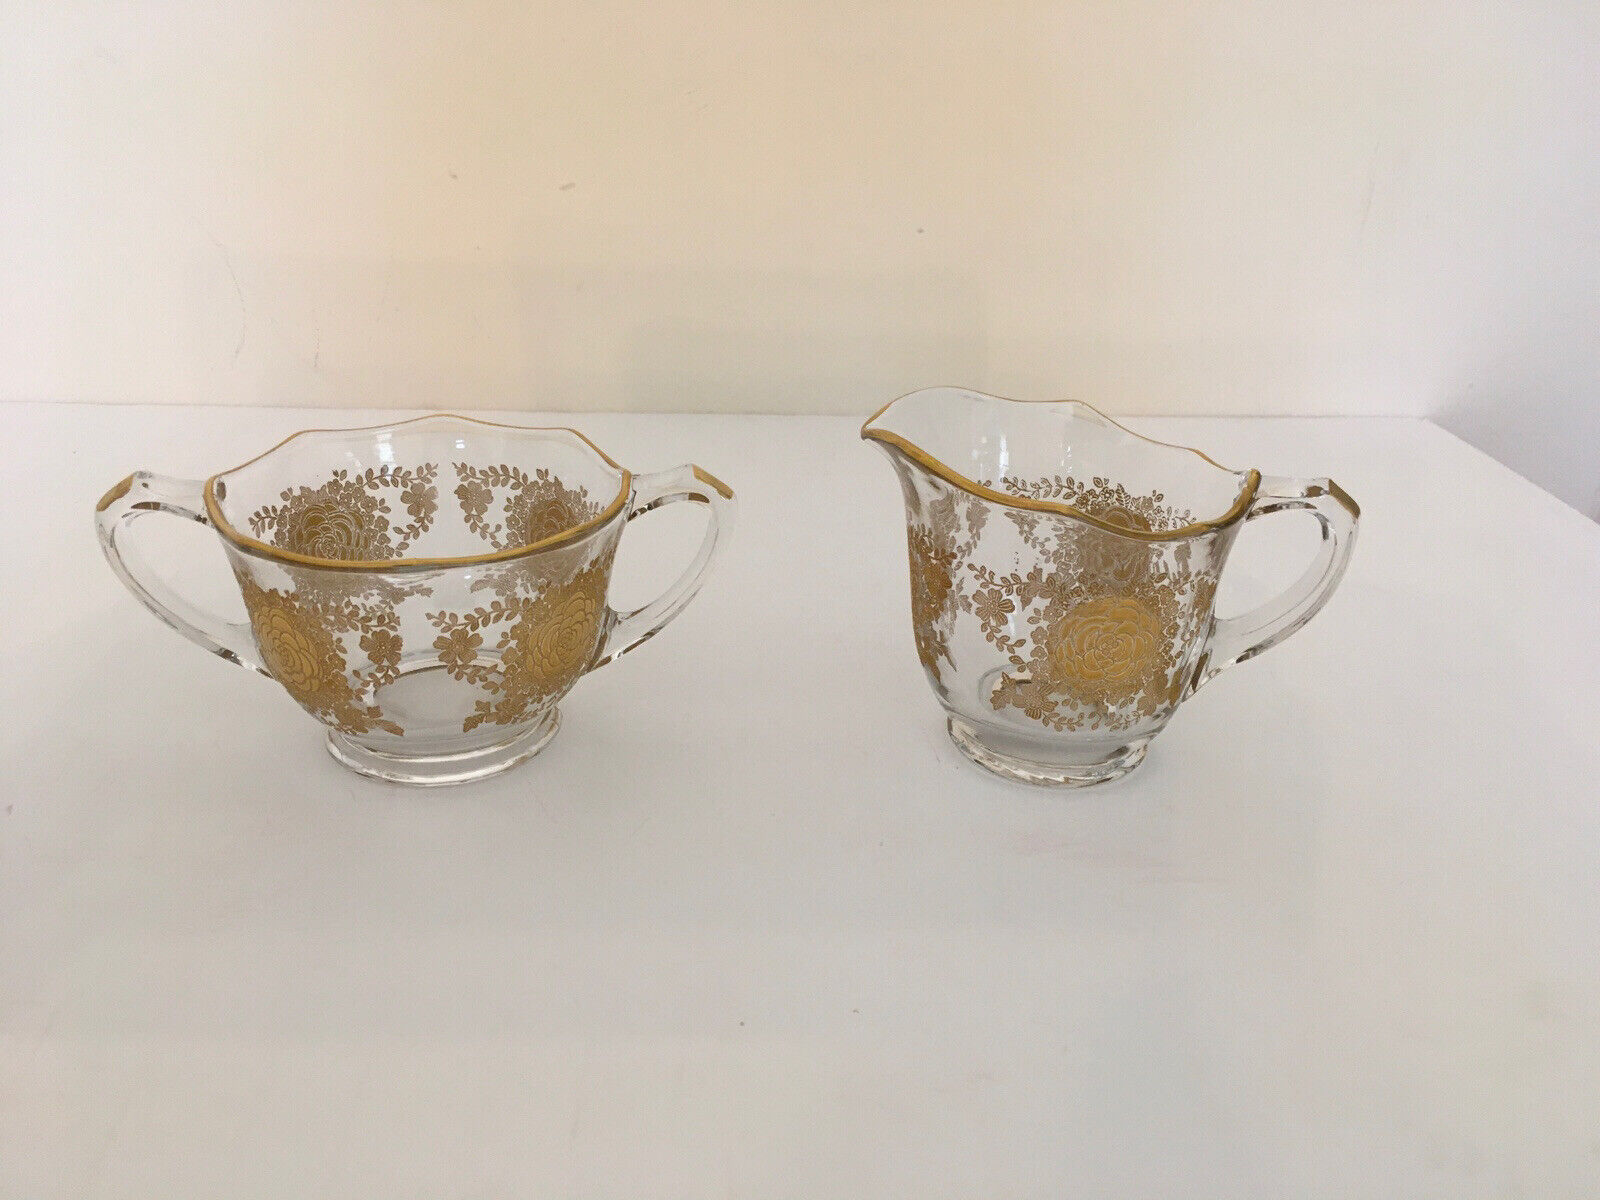 Antique Glass Sugar/Creamer Set with Heavy Gold- Trim Flowers & Edges